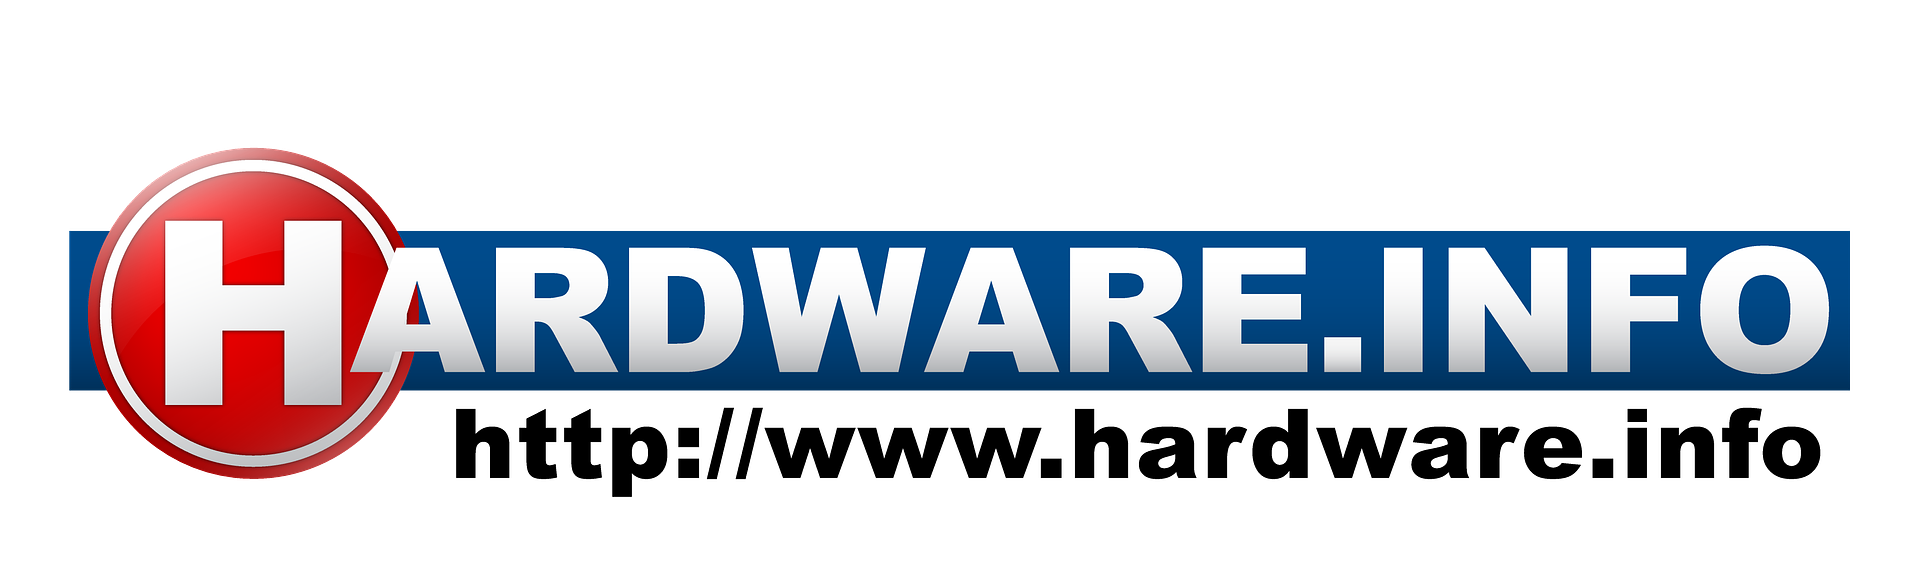 hardwareinfo4-logo-png.png